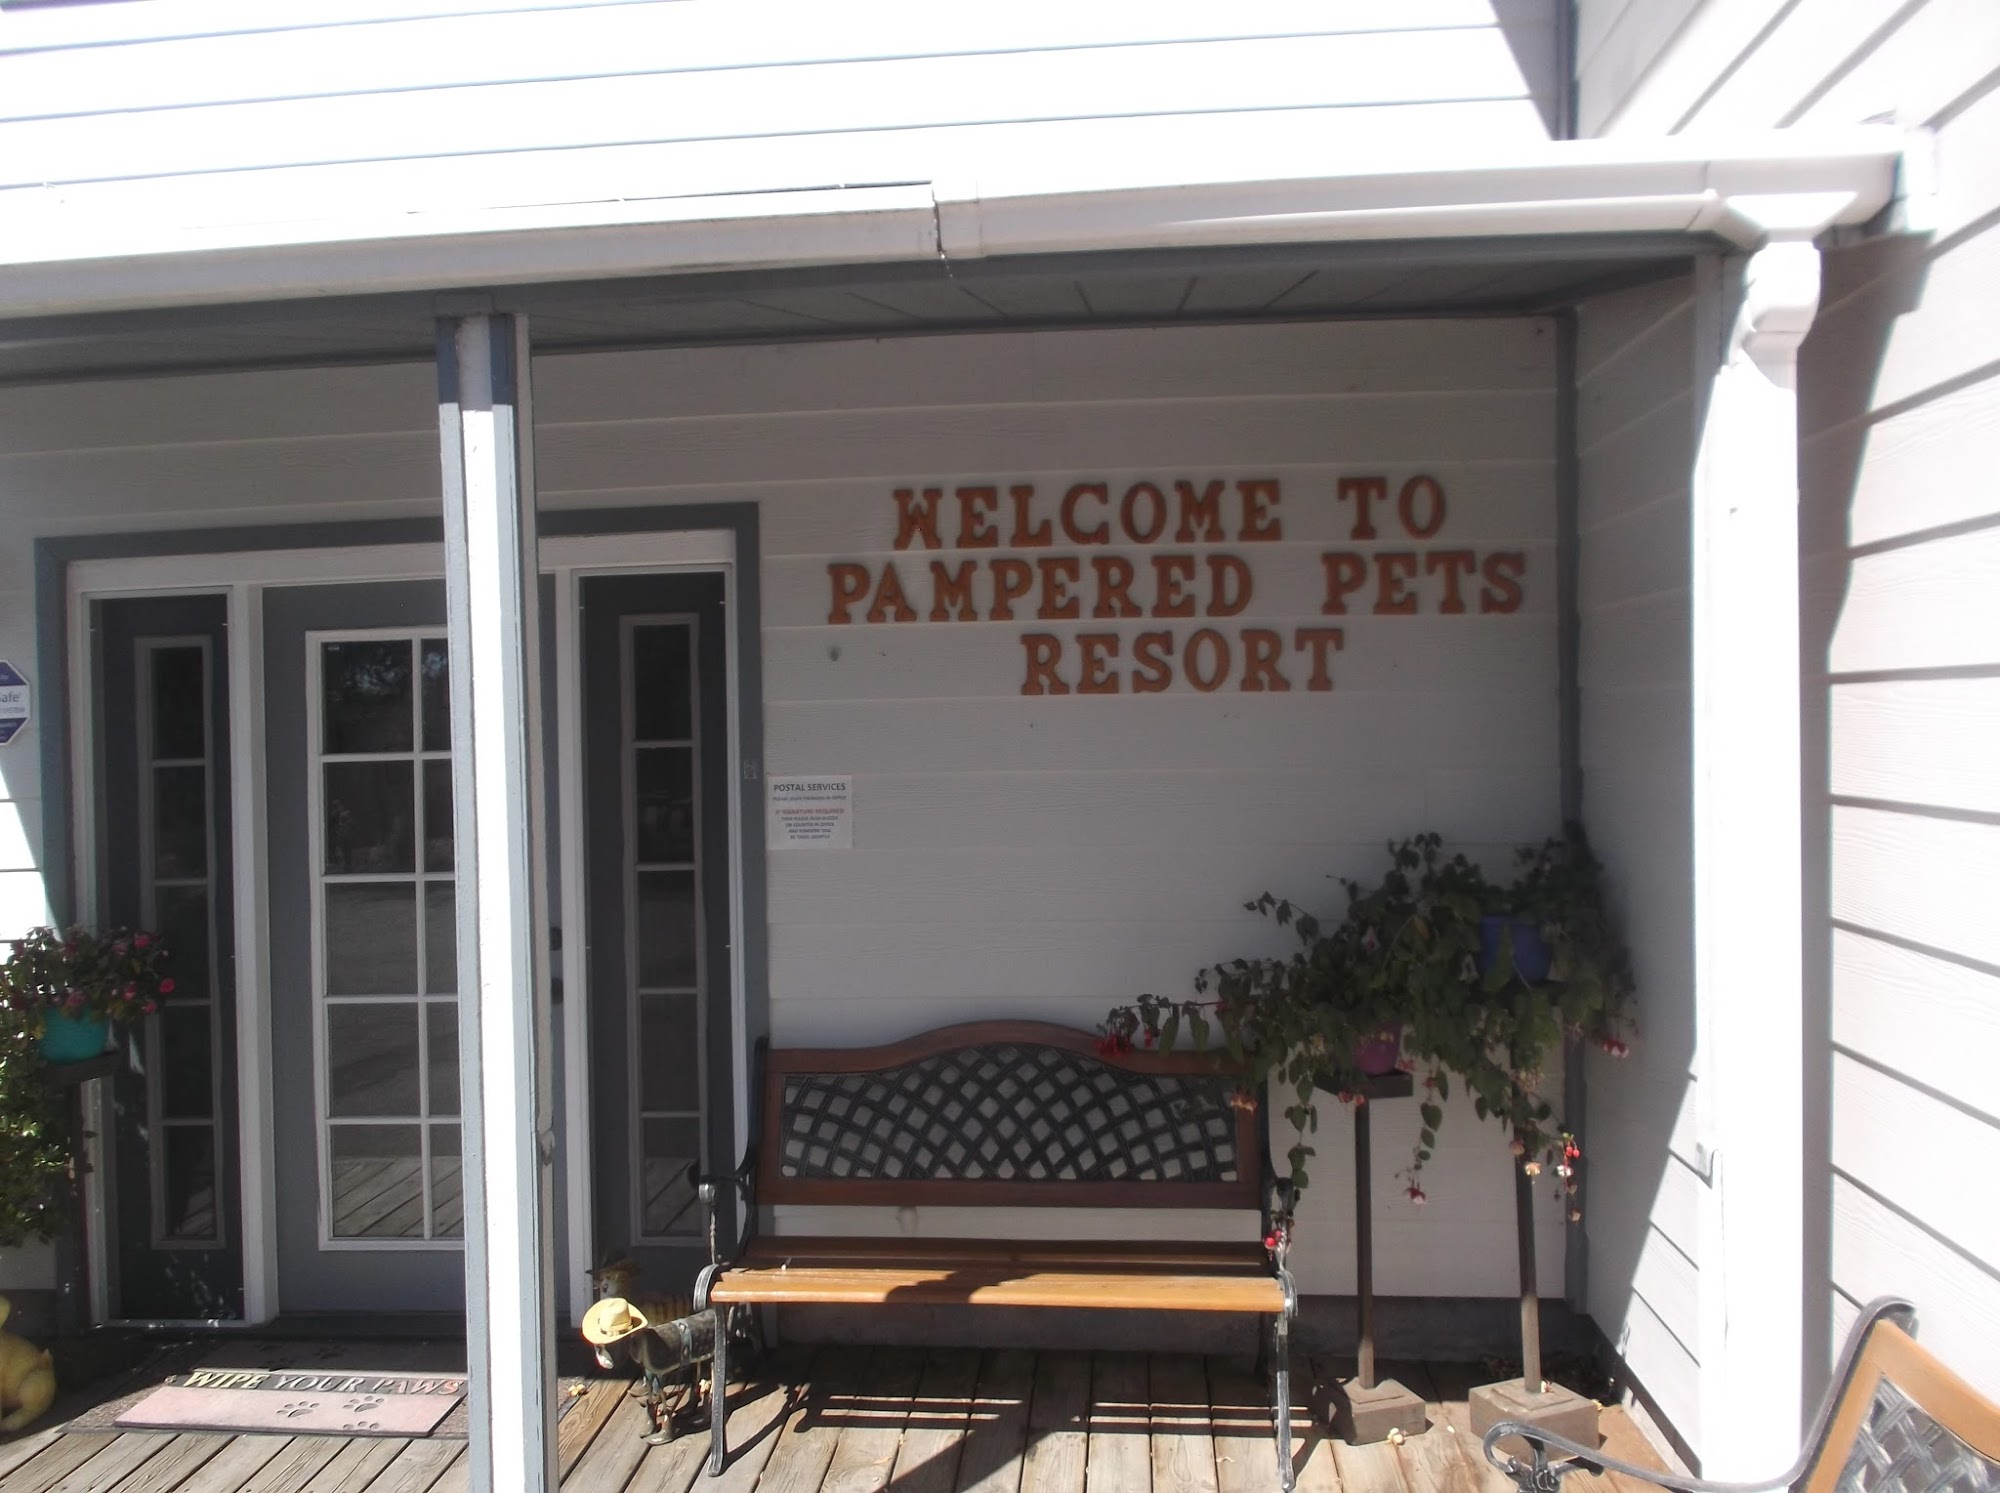 Pampered Pets Resort, Inc.